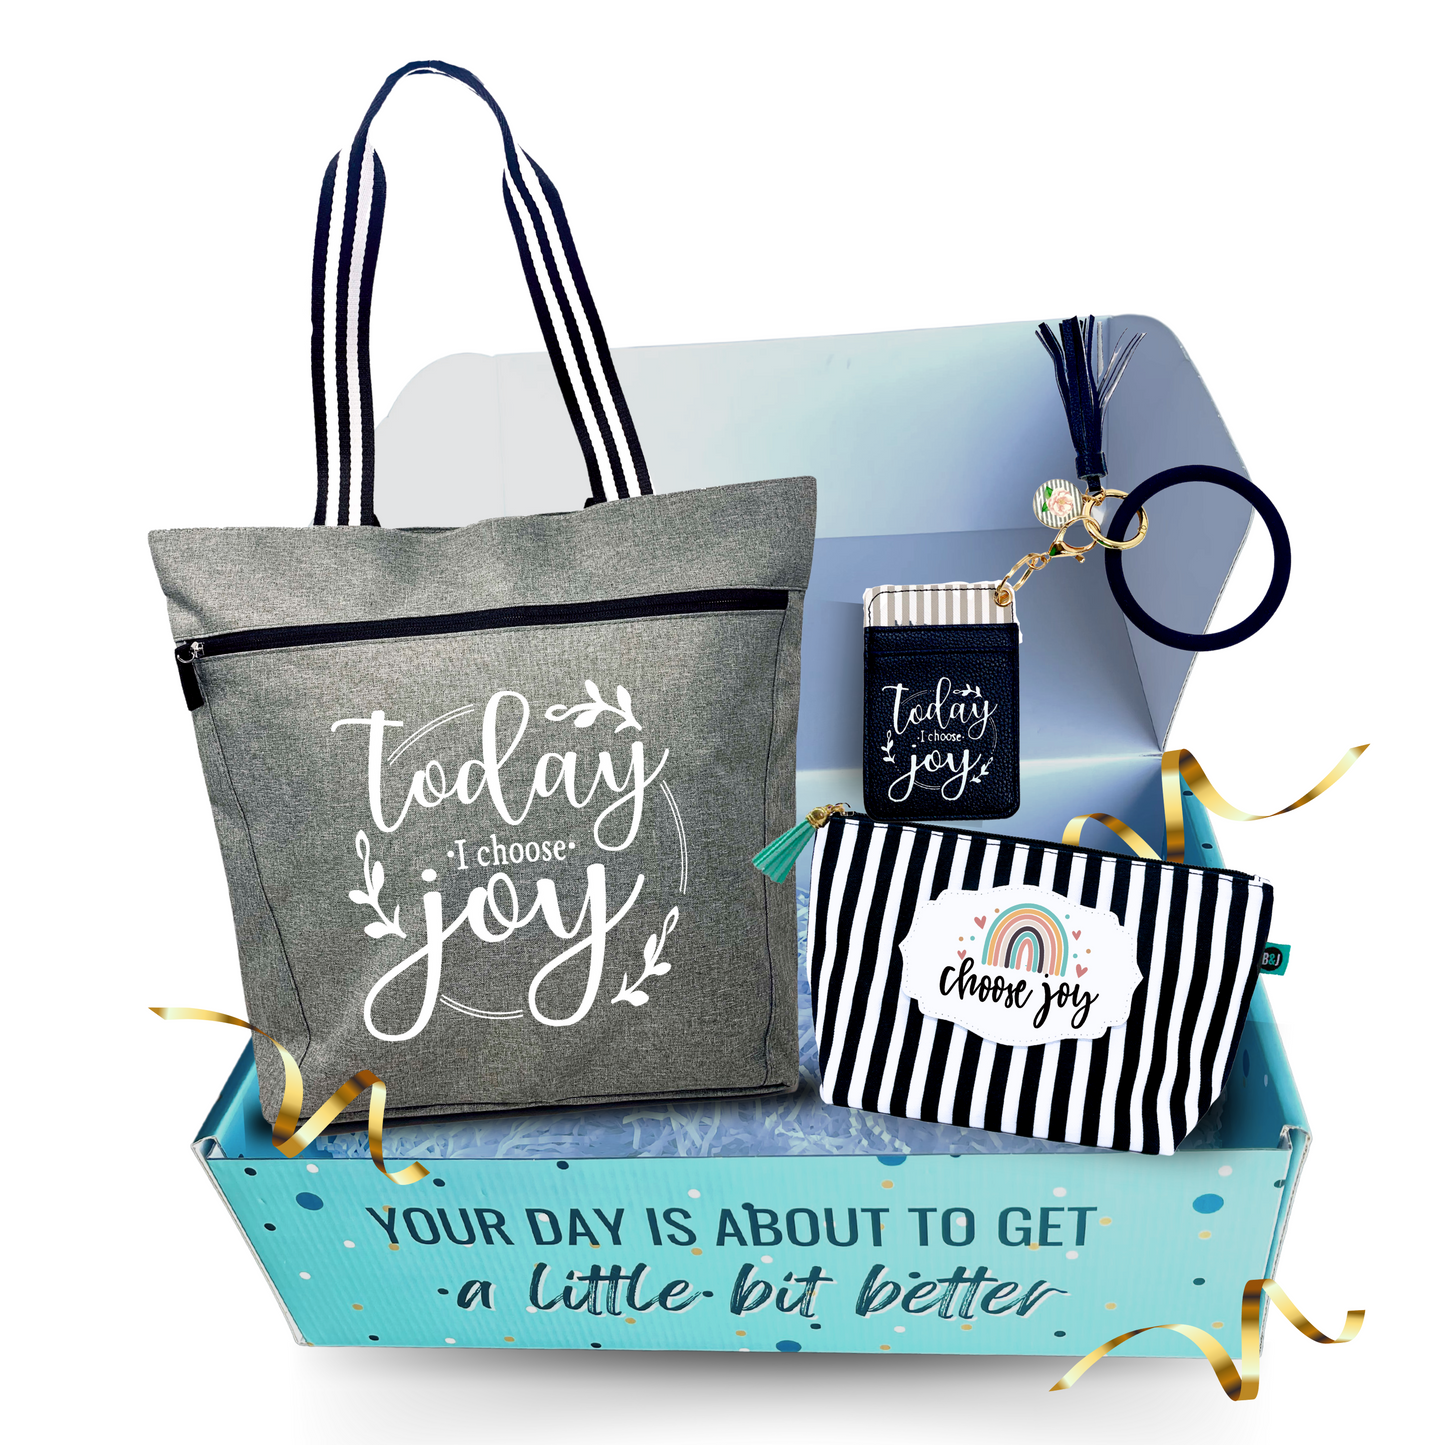 Brooke and Jess Designs - Choose Joy Lexie Tote Bag, Janie Makeup Bag, Keychain Accessory Gift Box